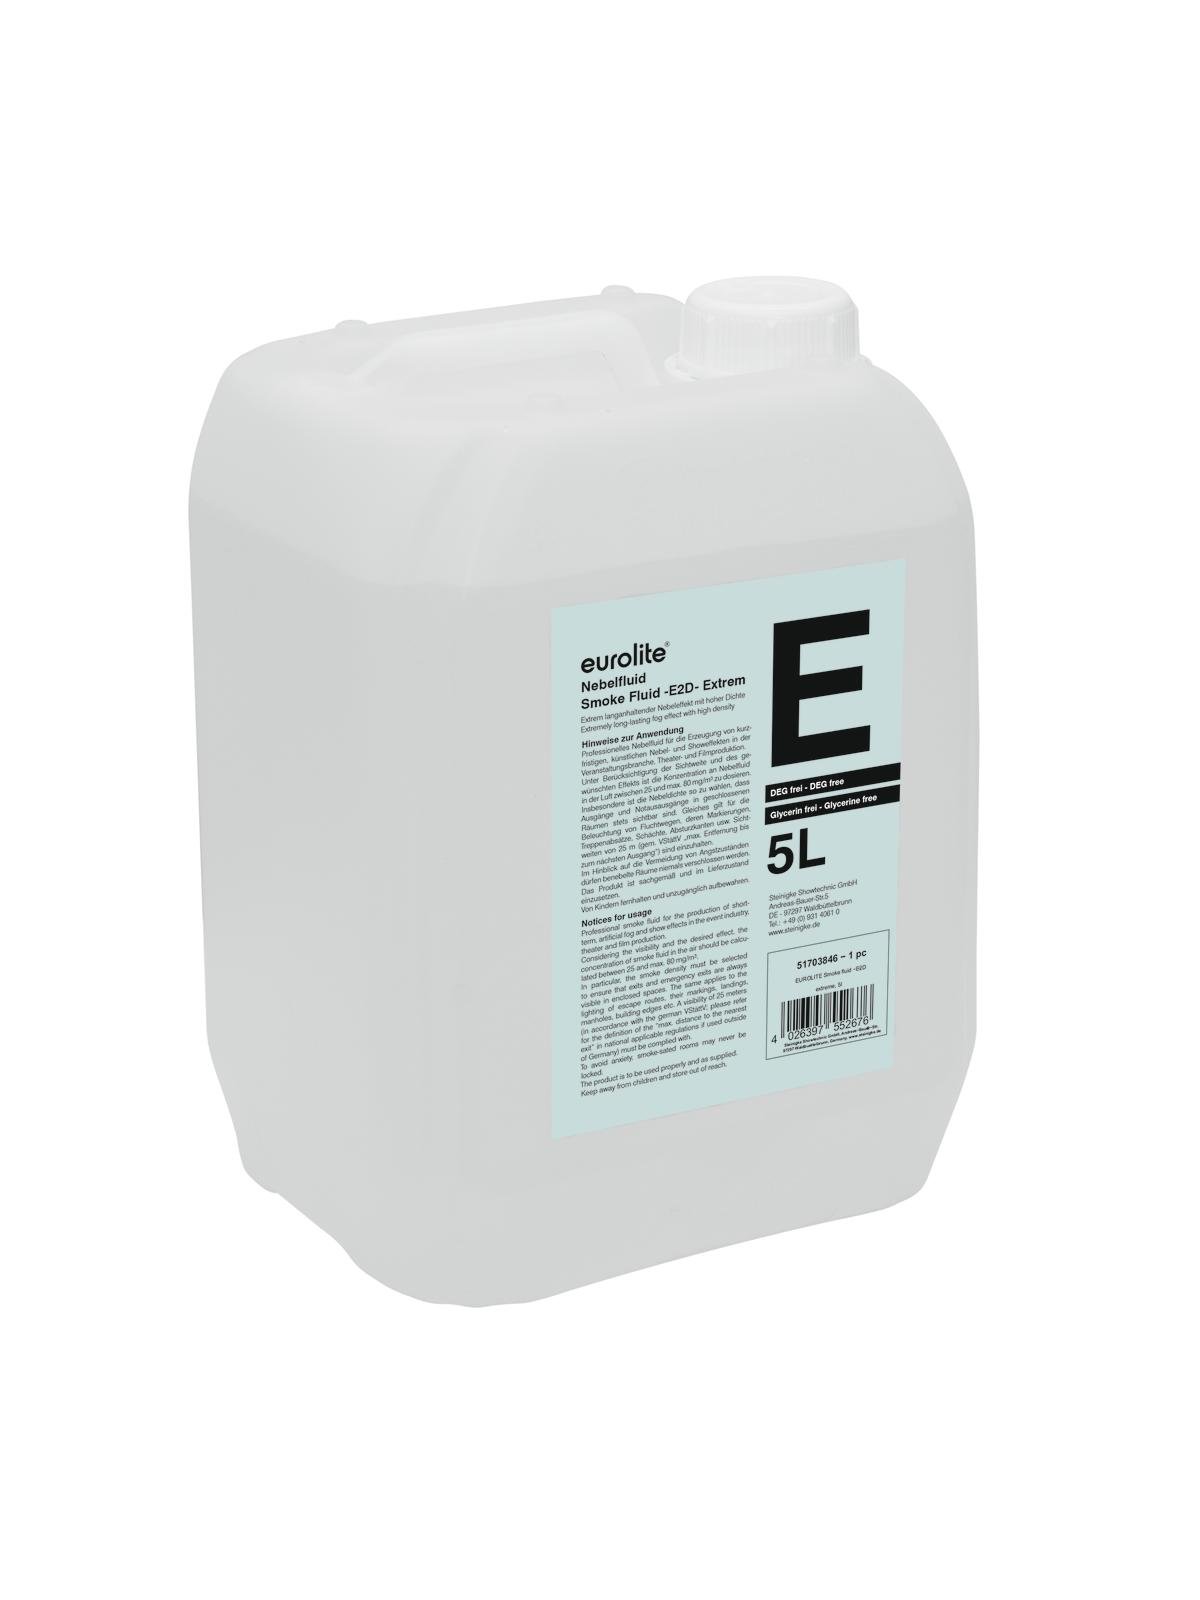 Smoke Fluid E2D Extrem Fluid Nebelfluid 5L - Eurolite